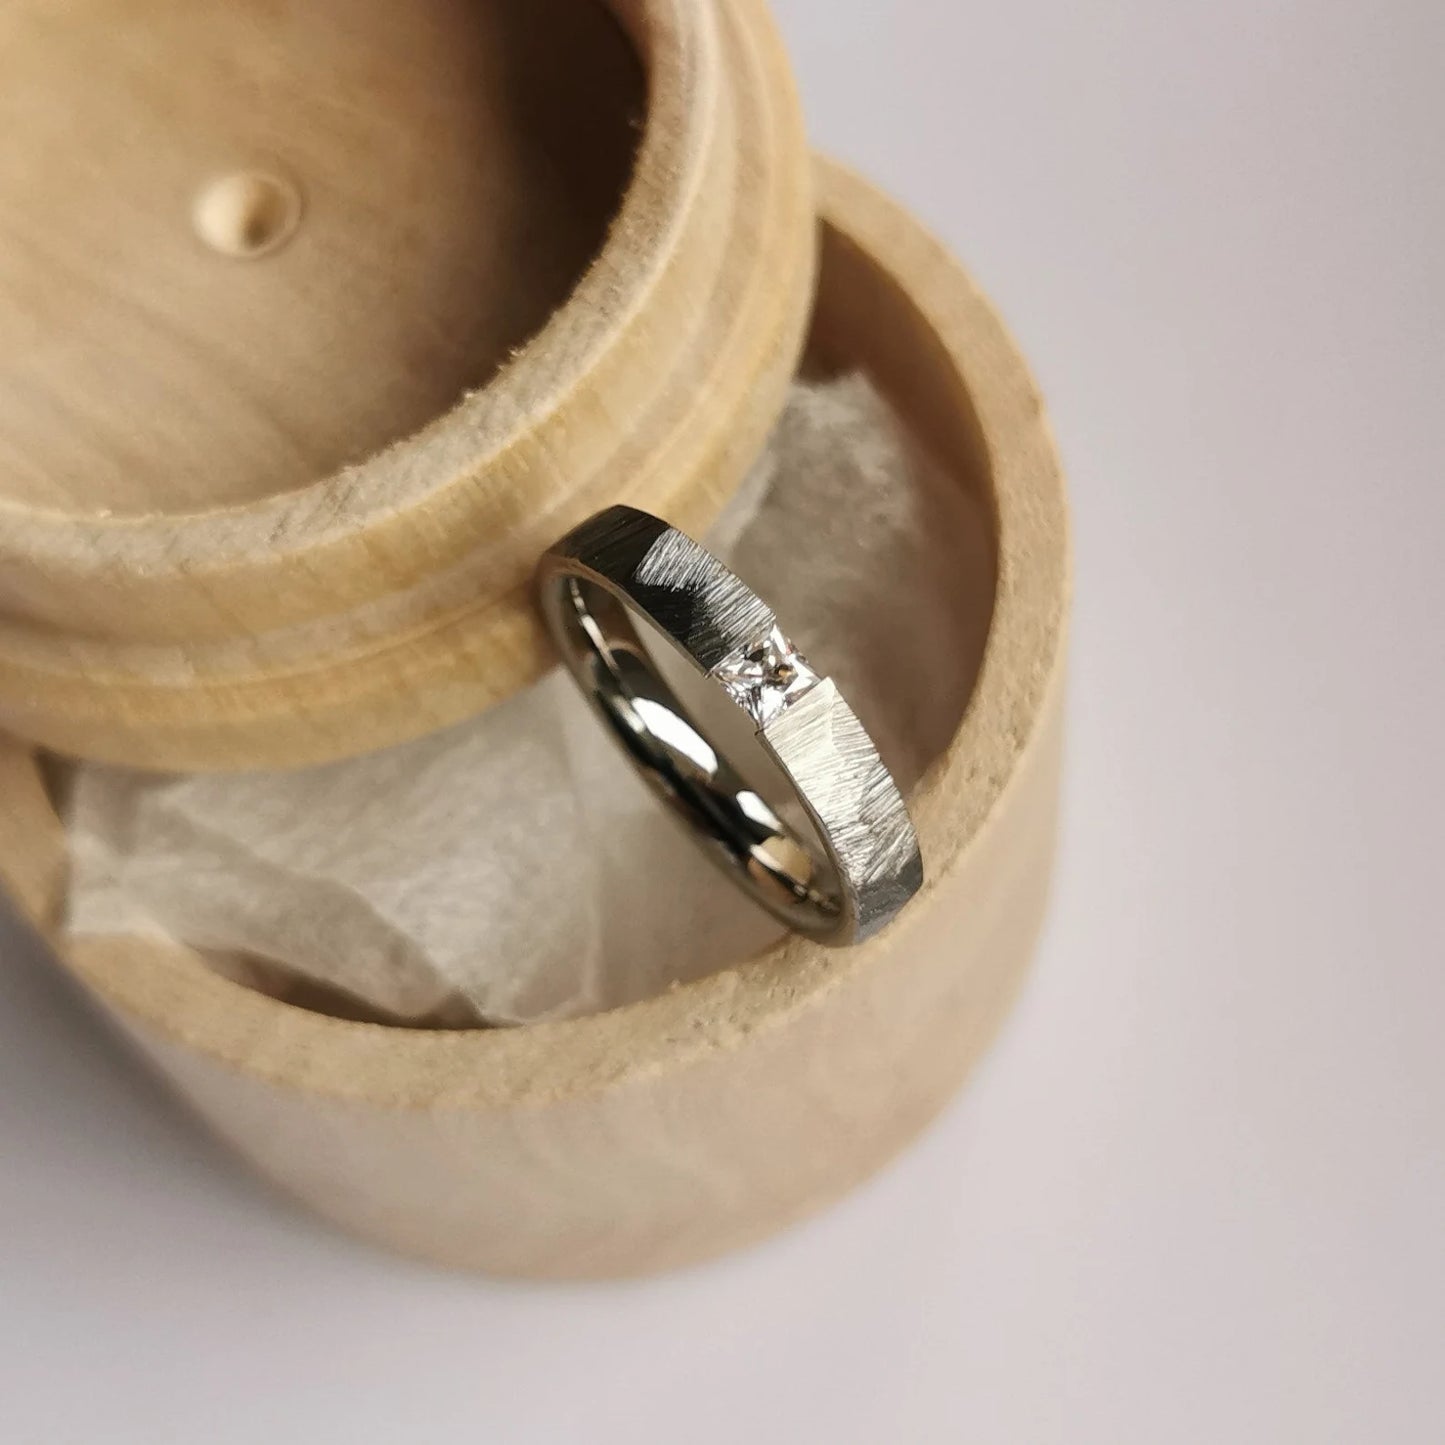 Unique Handmade Faceted Titanium Tension Ring with Square Princess Cut Stone Setting.